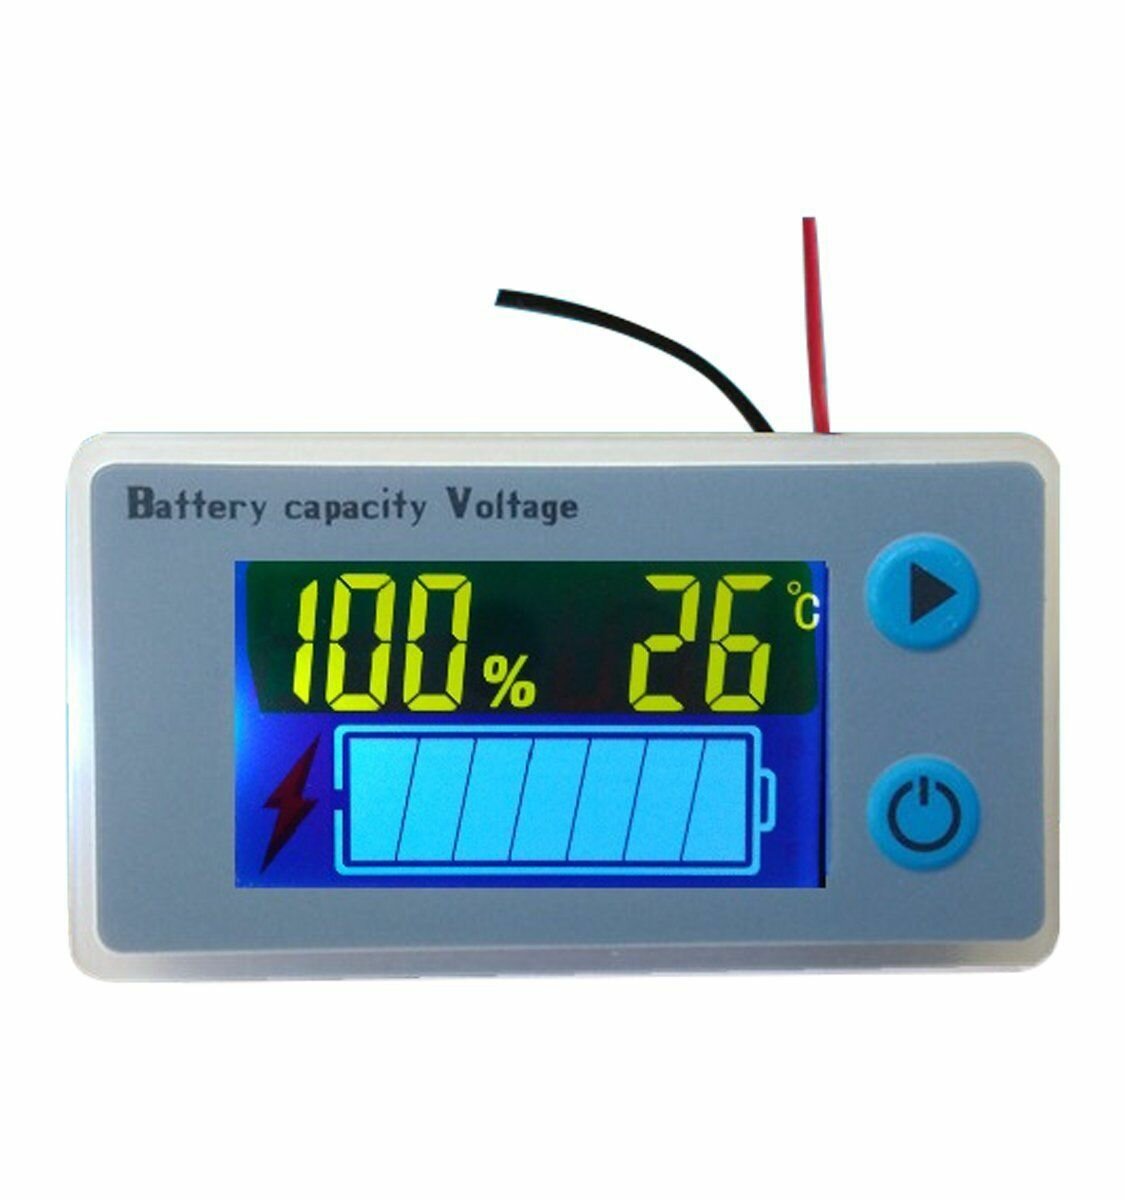 

12V/24V/36V LCD Display Lead Acid Battery Capacity Meter Voltmeter Power Monitor